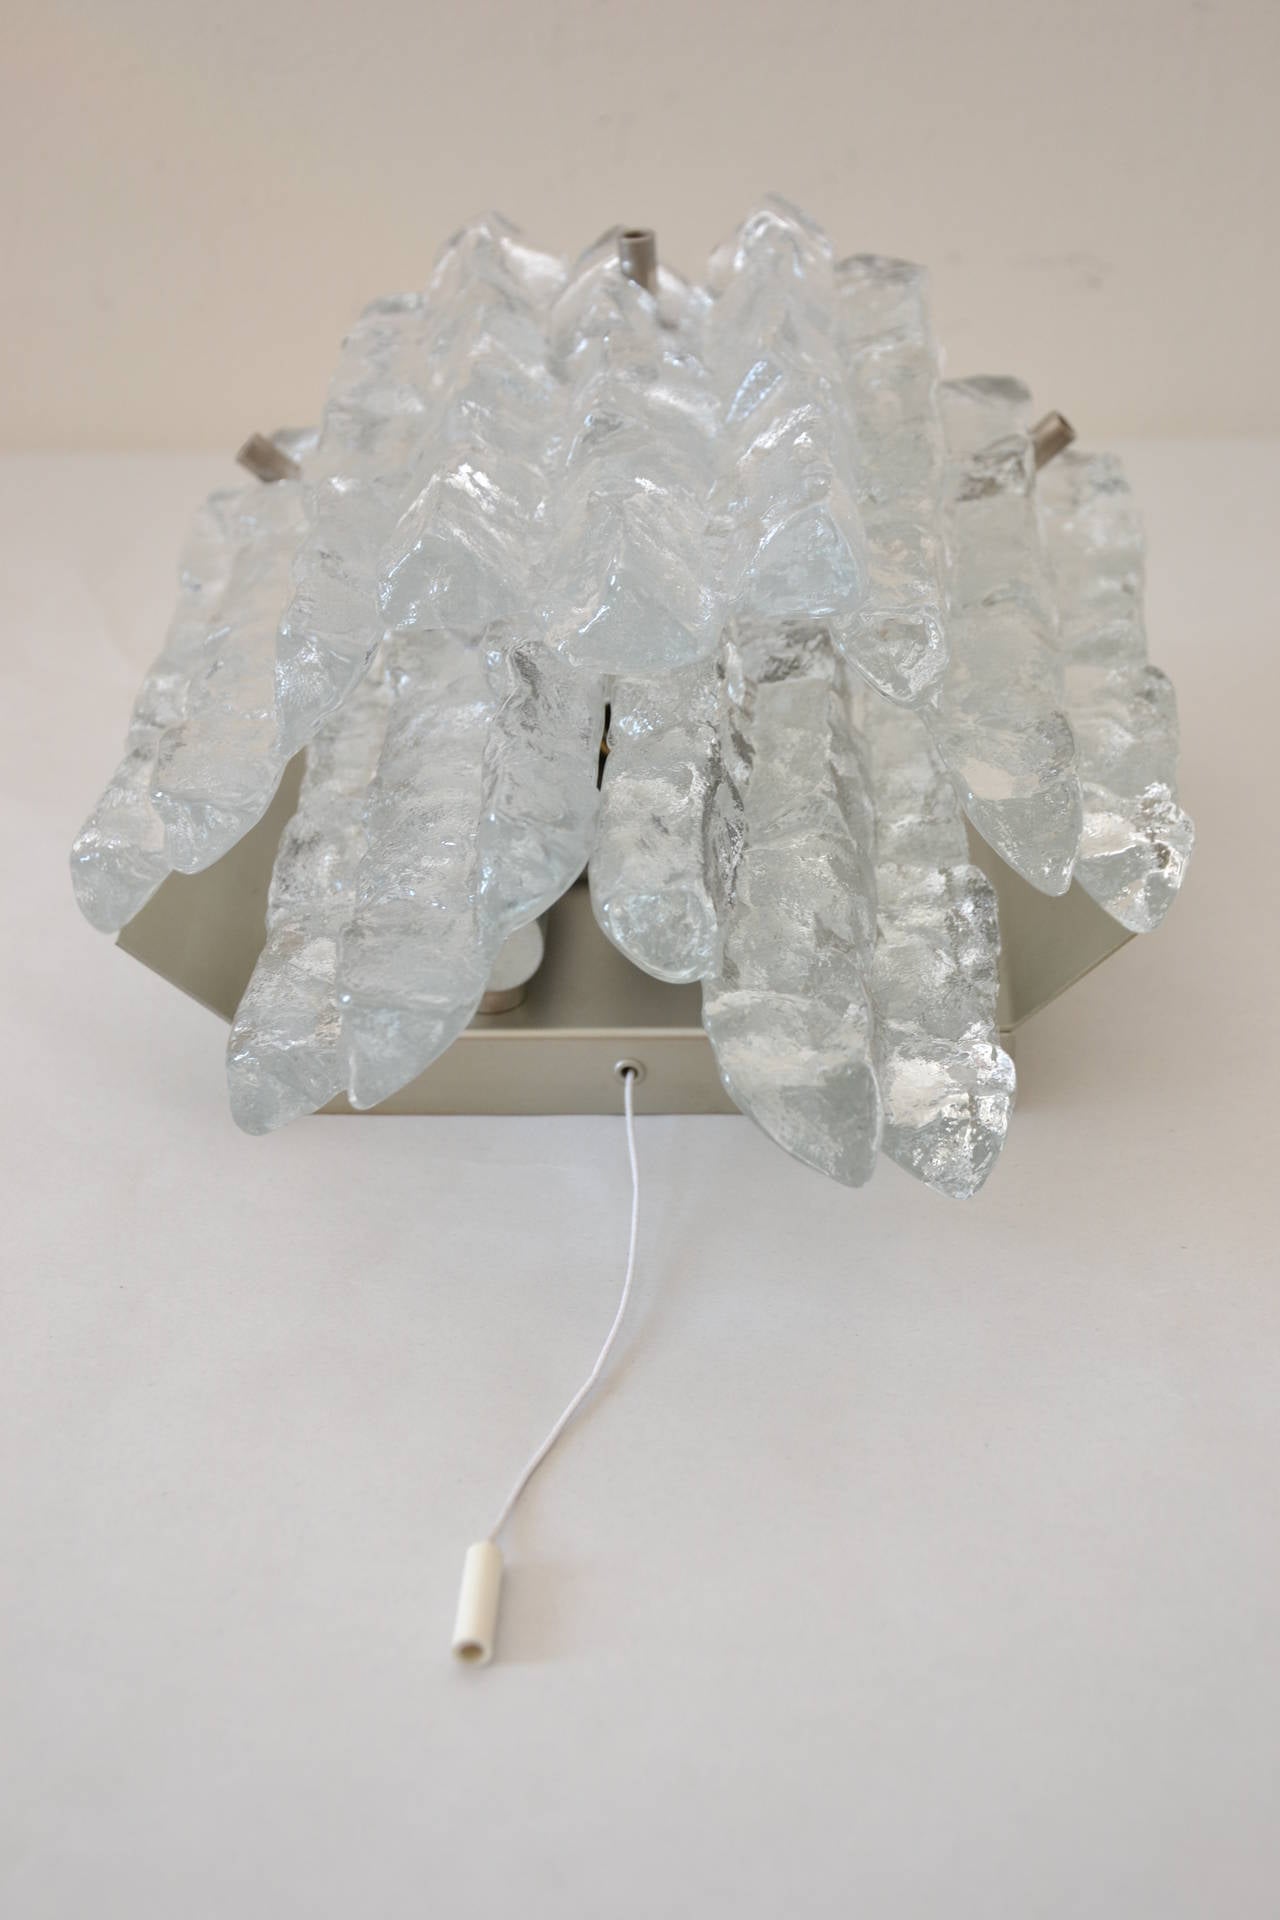 Massive Kalmar Ice Glass sconce
nickel platend